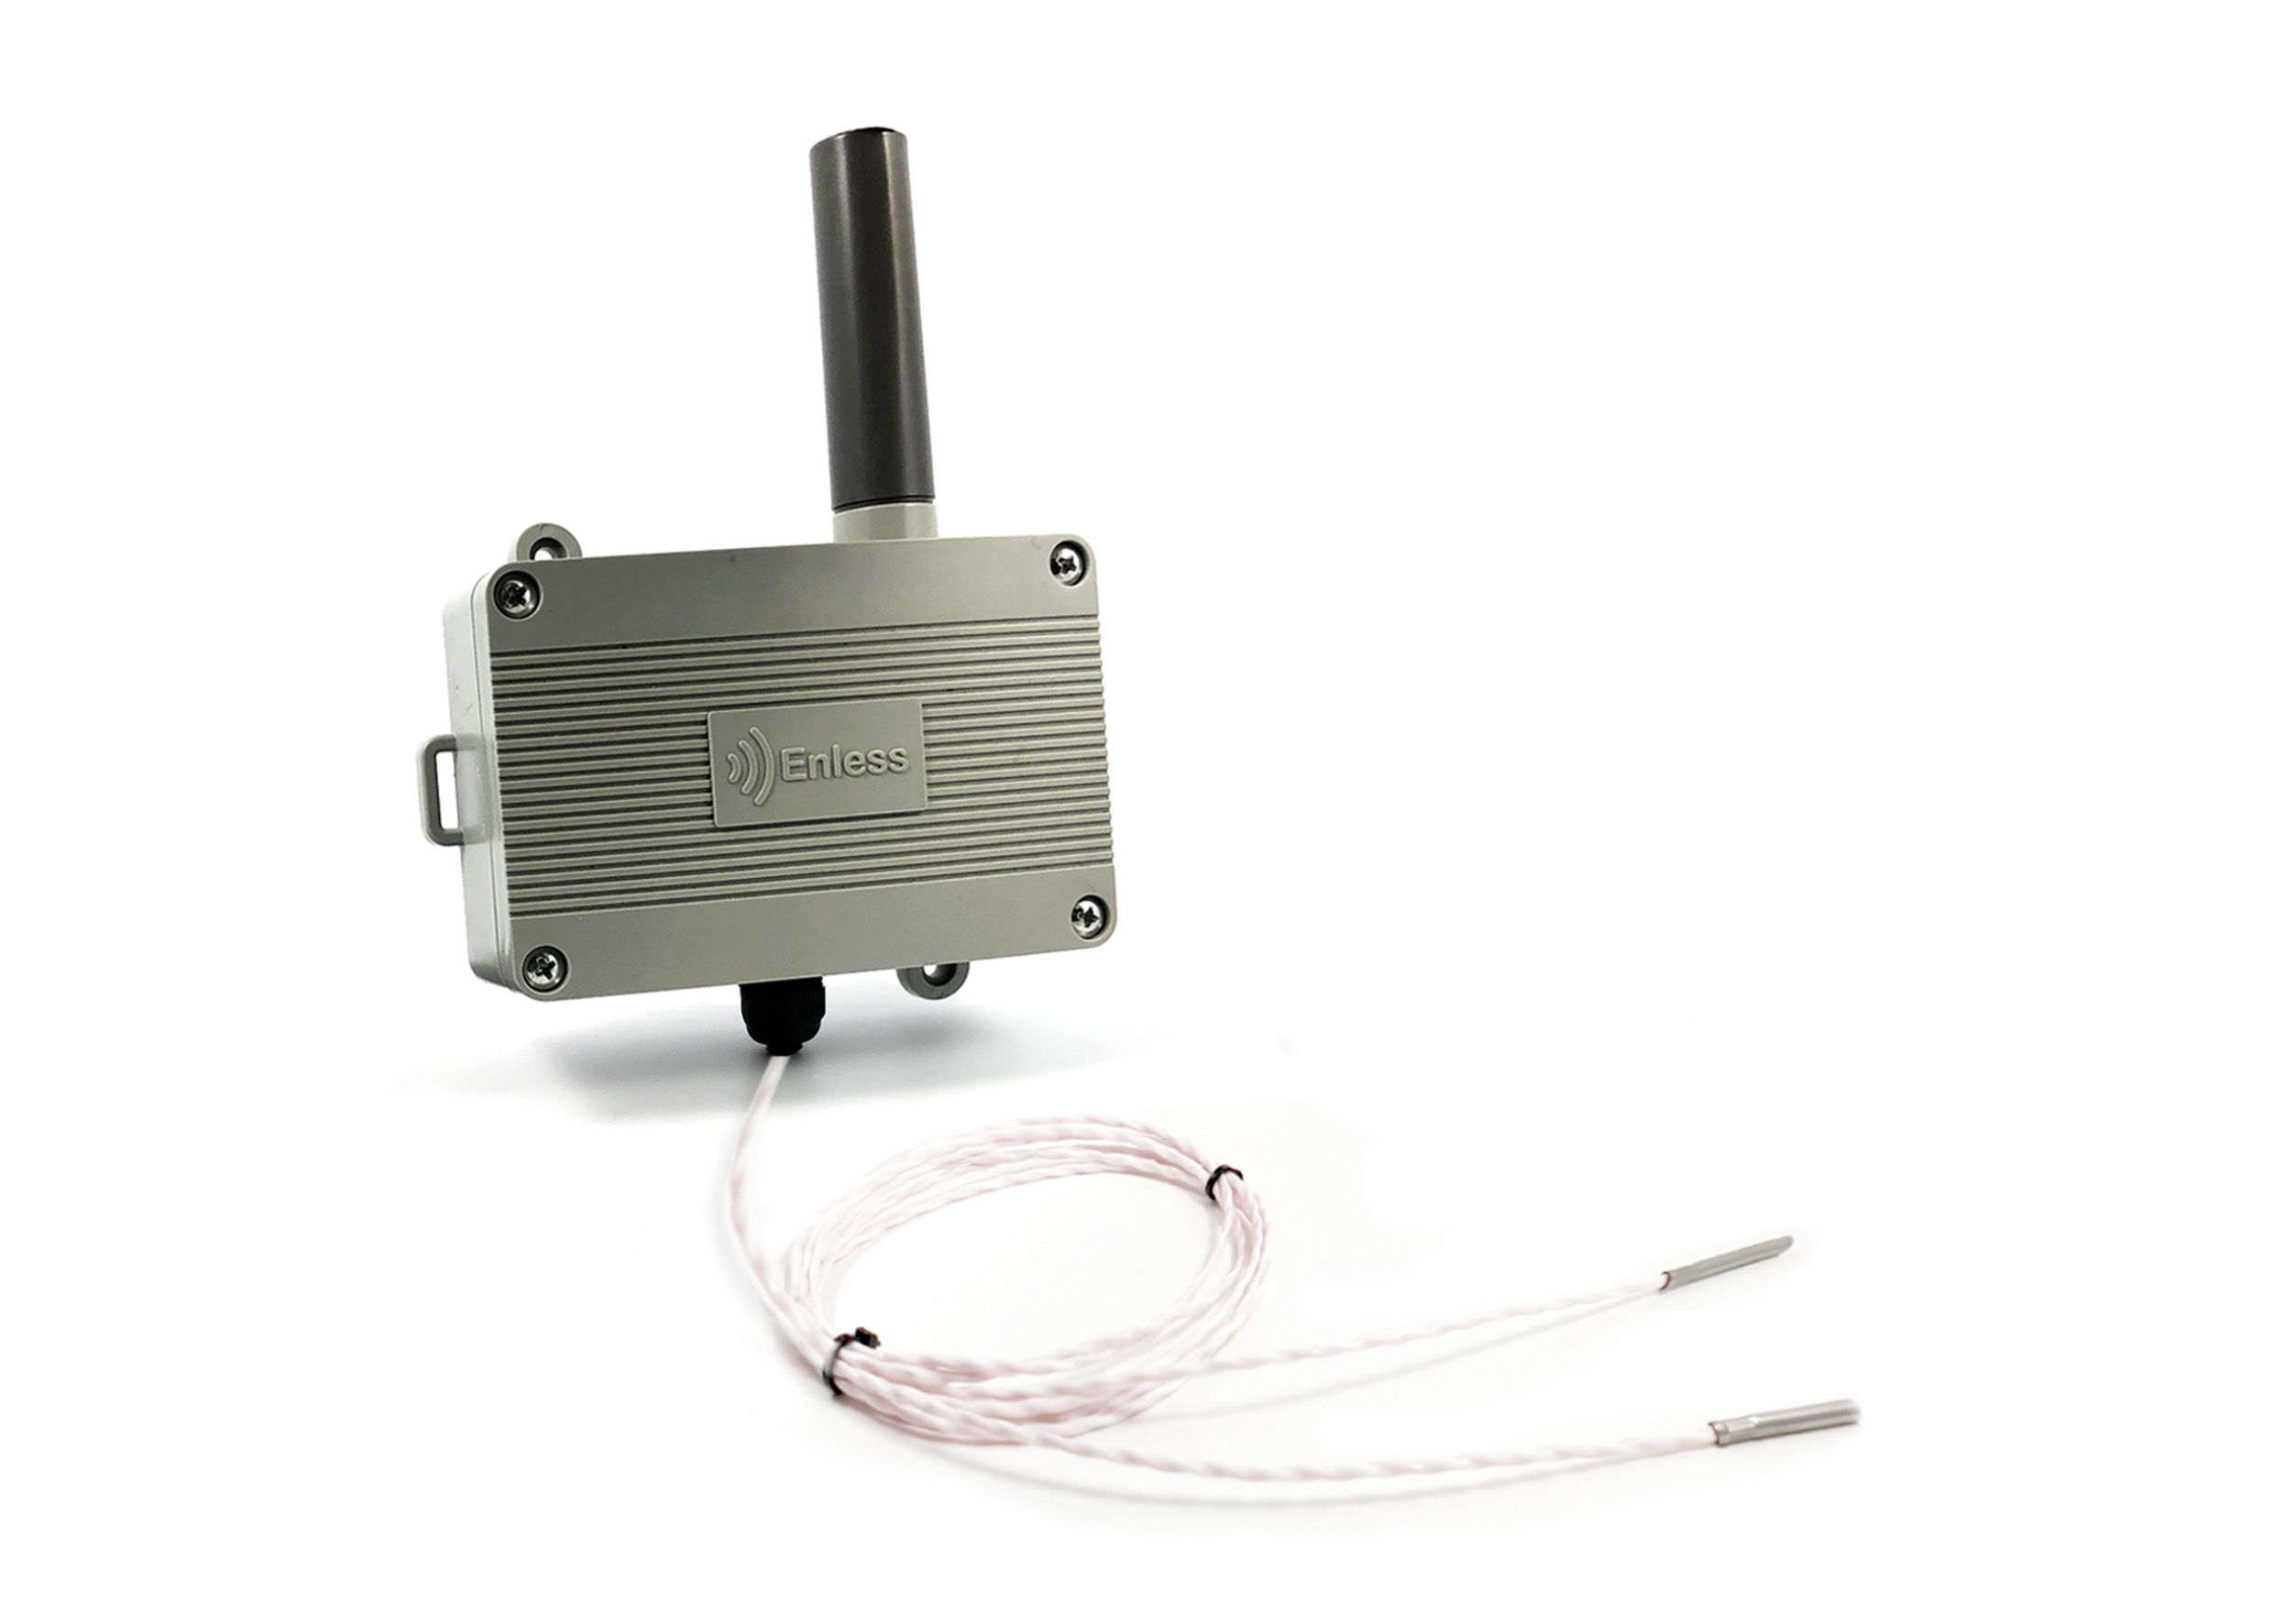 Environmental Monitoring | Temperature and Humidity Sensor |  LoRaWAN/NB-IoT/Cellular IoT